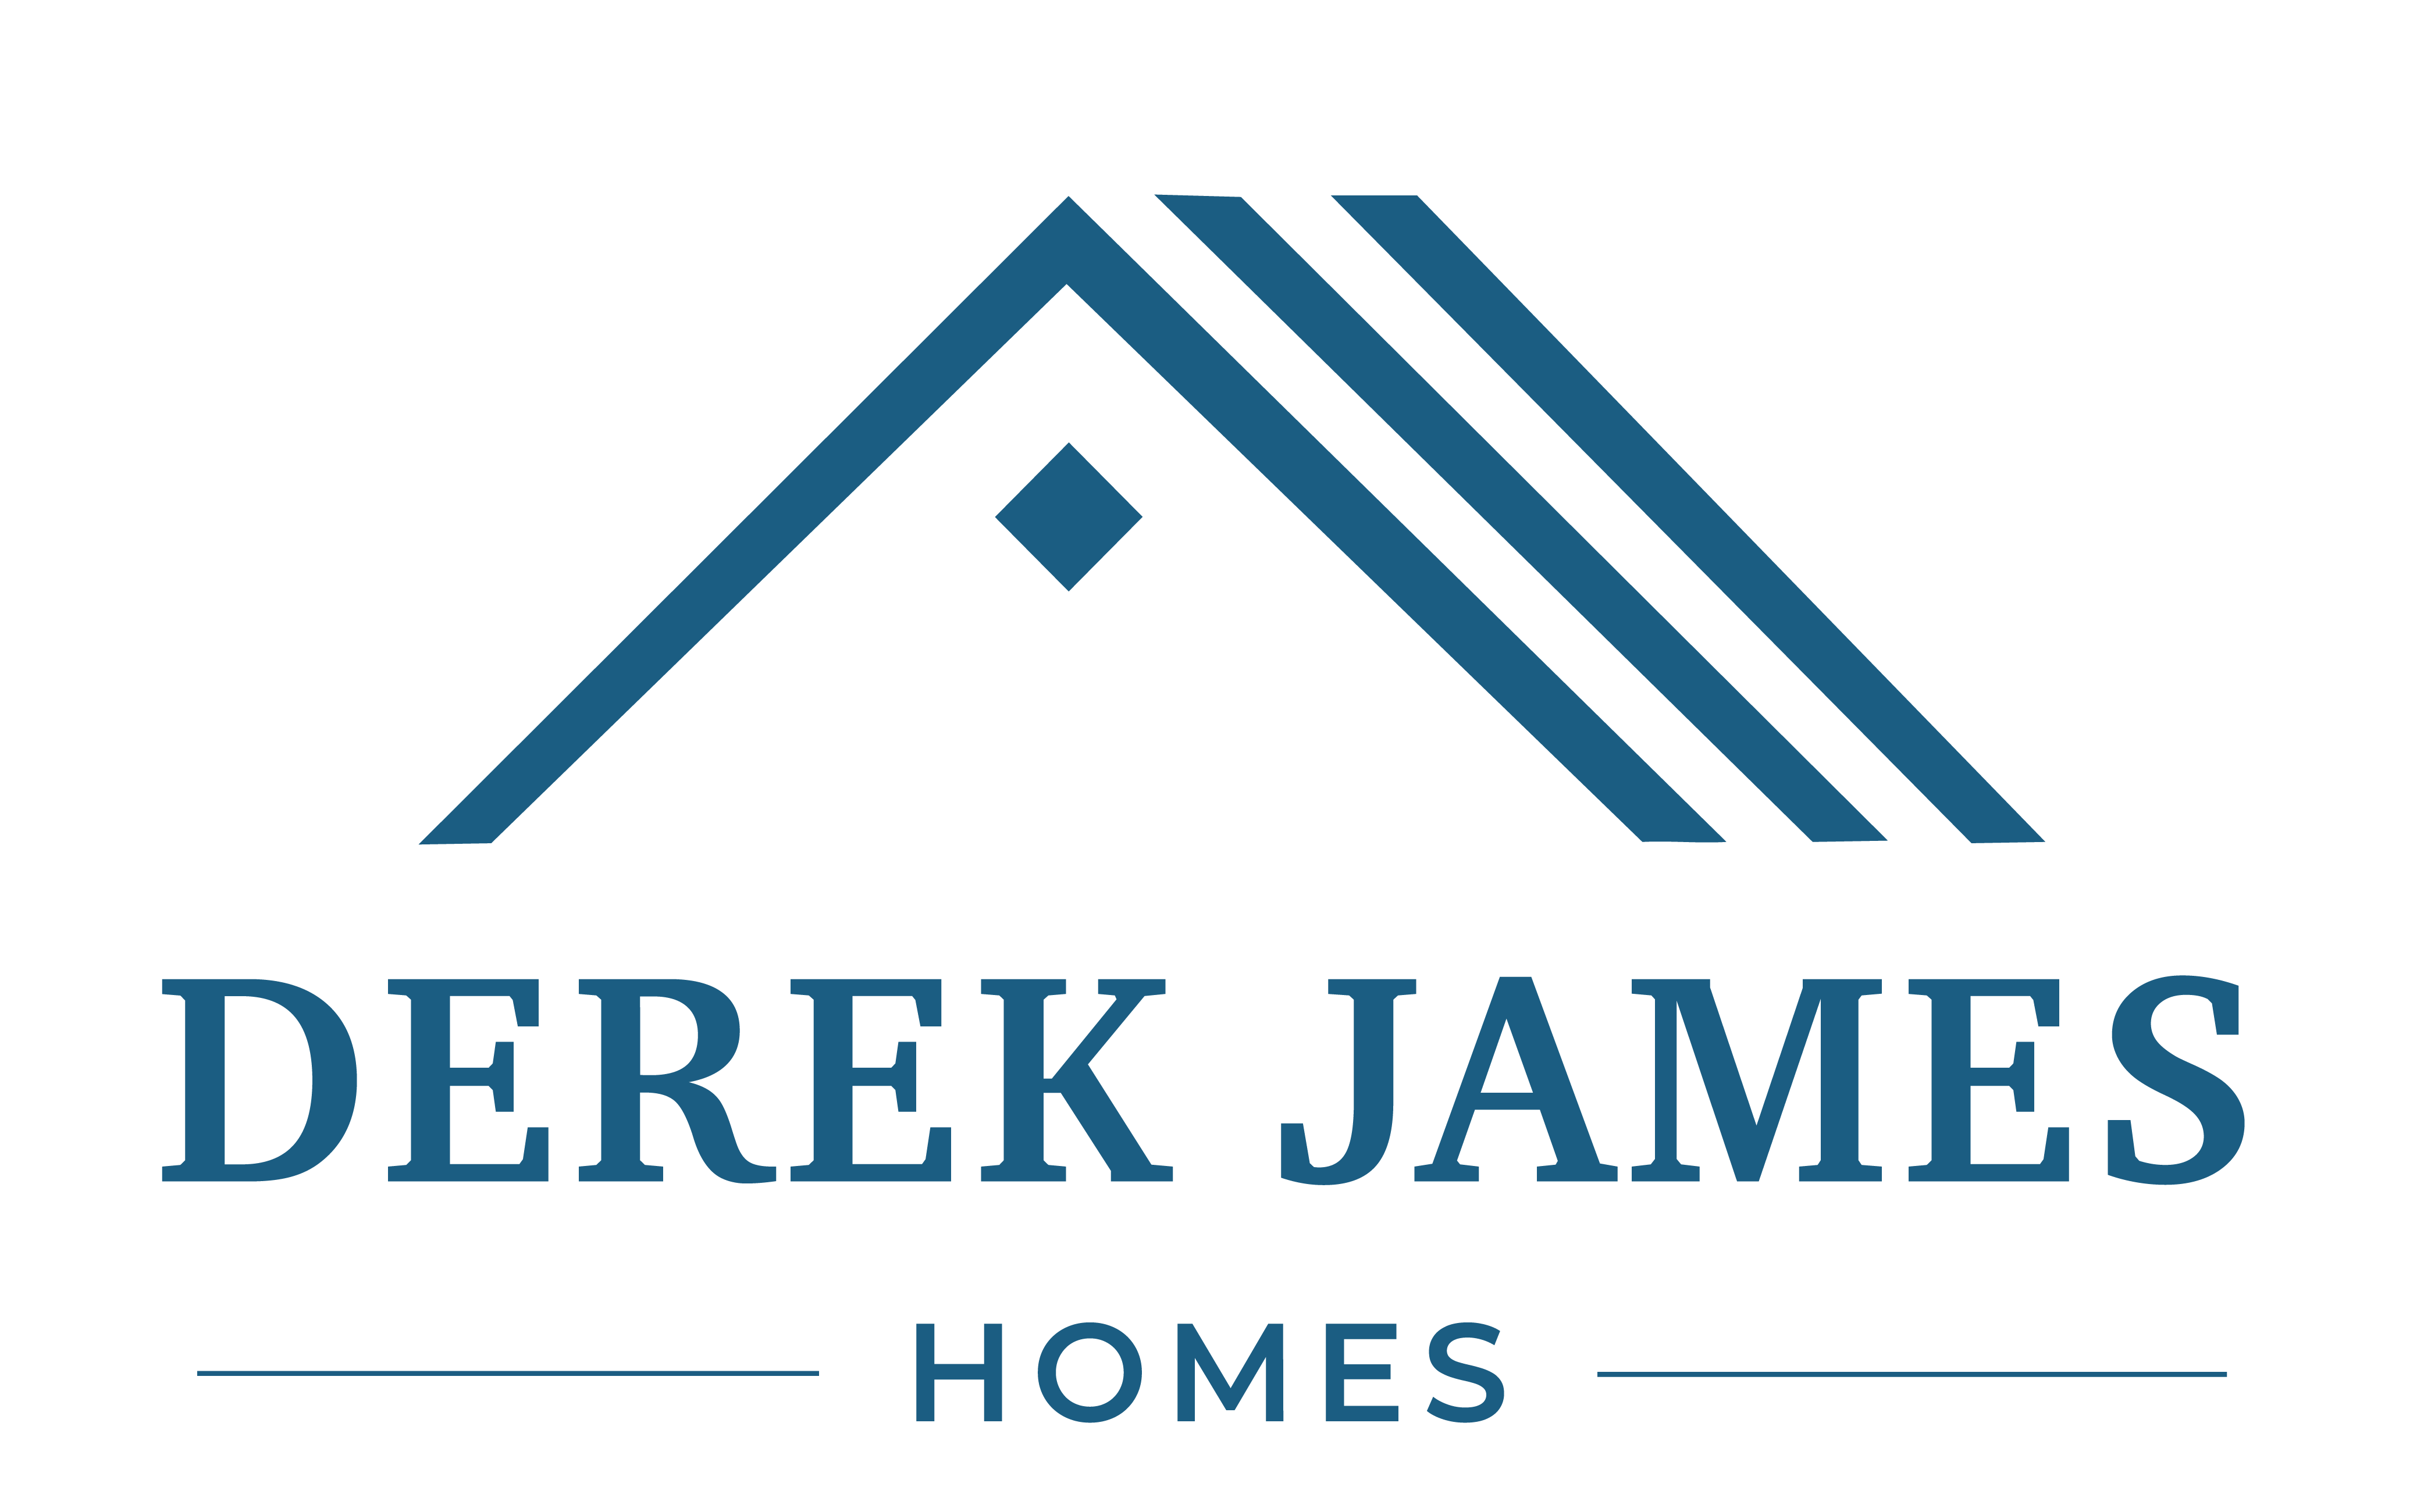 Derek James Homes